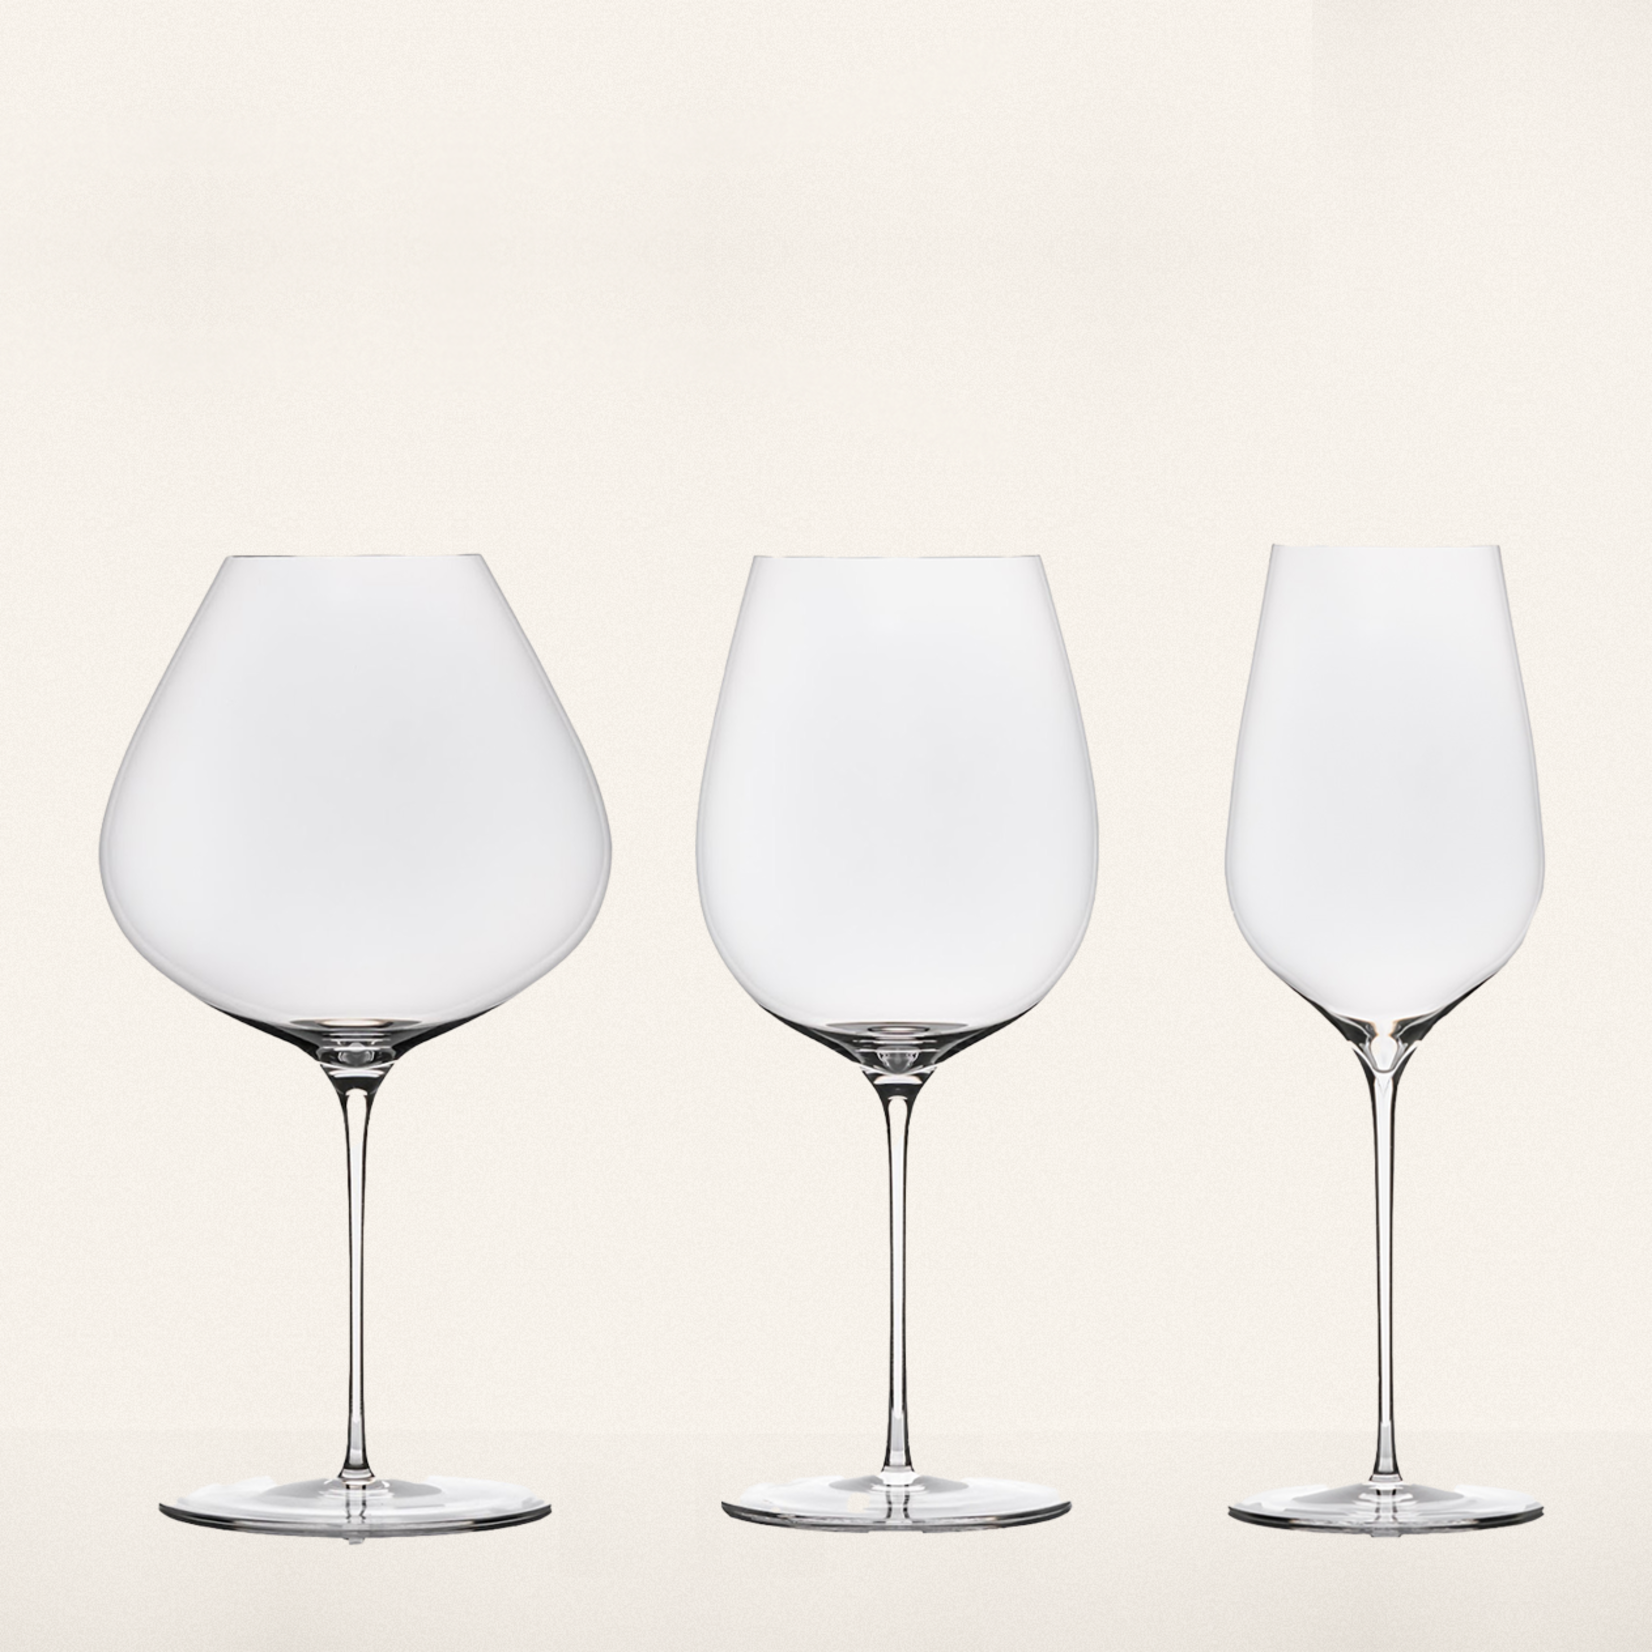 Sydonios L'Esthete - set of 2 glasses